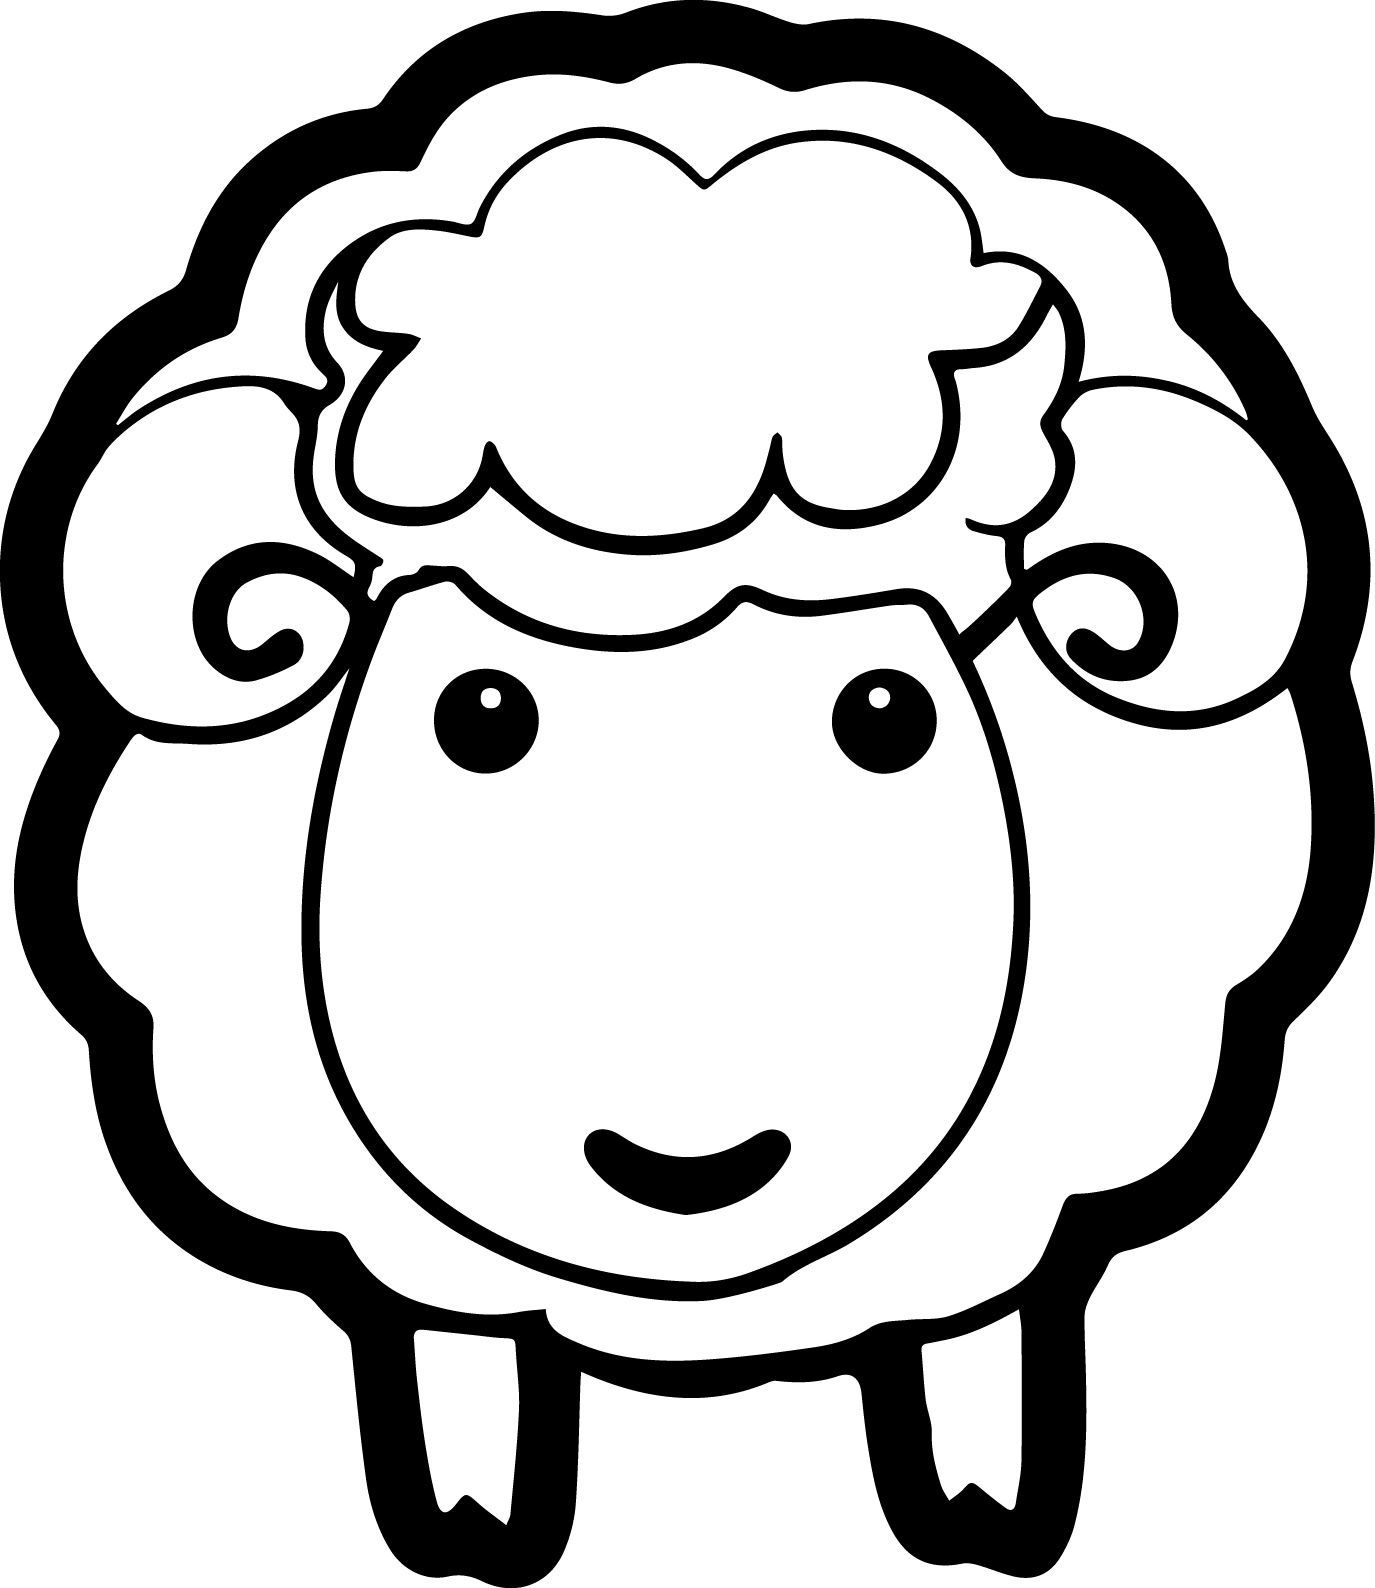 Cartoon Sheep Coloring Pages at GetDrawings Free download